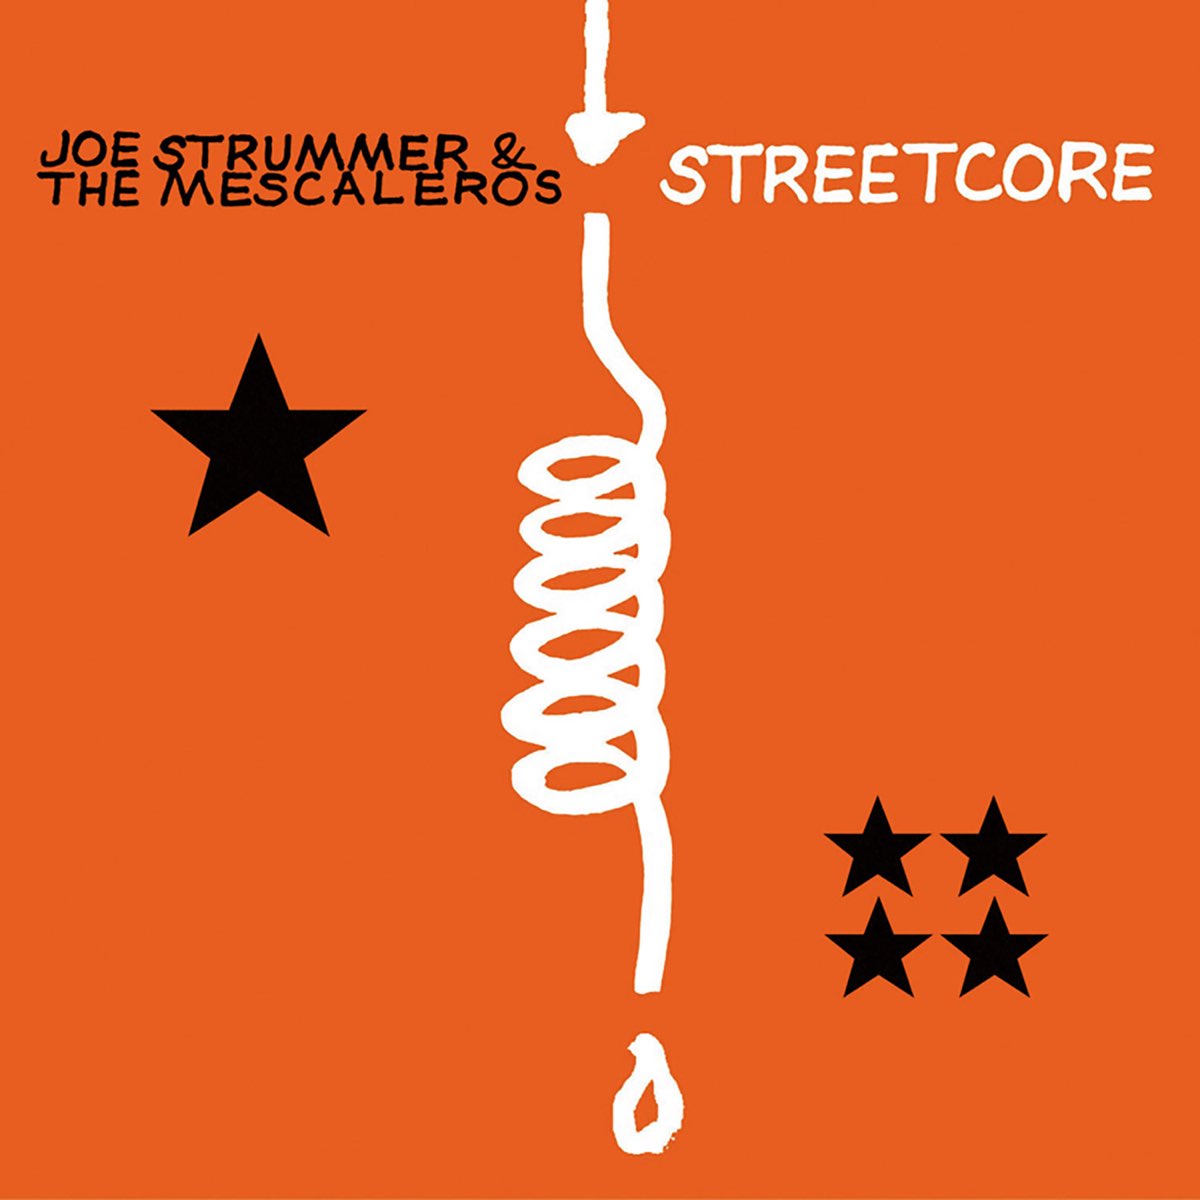 Strummer, Joe & The Mescaleros: Streetcore (Vinyl LP)